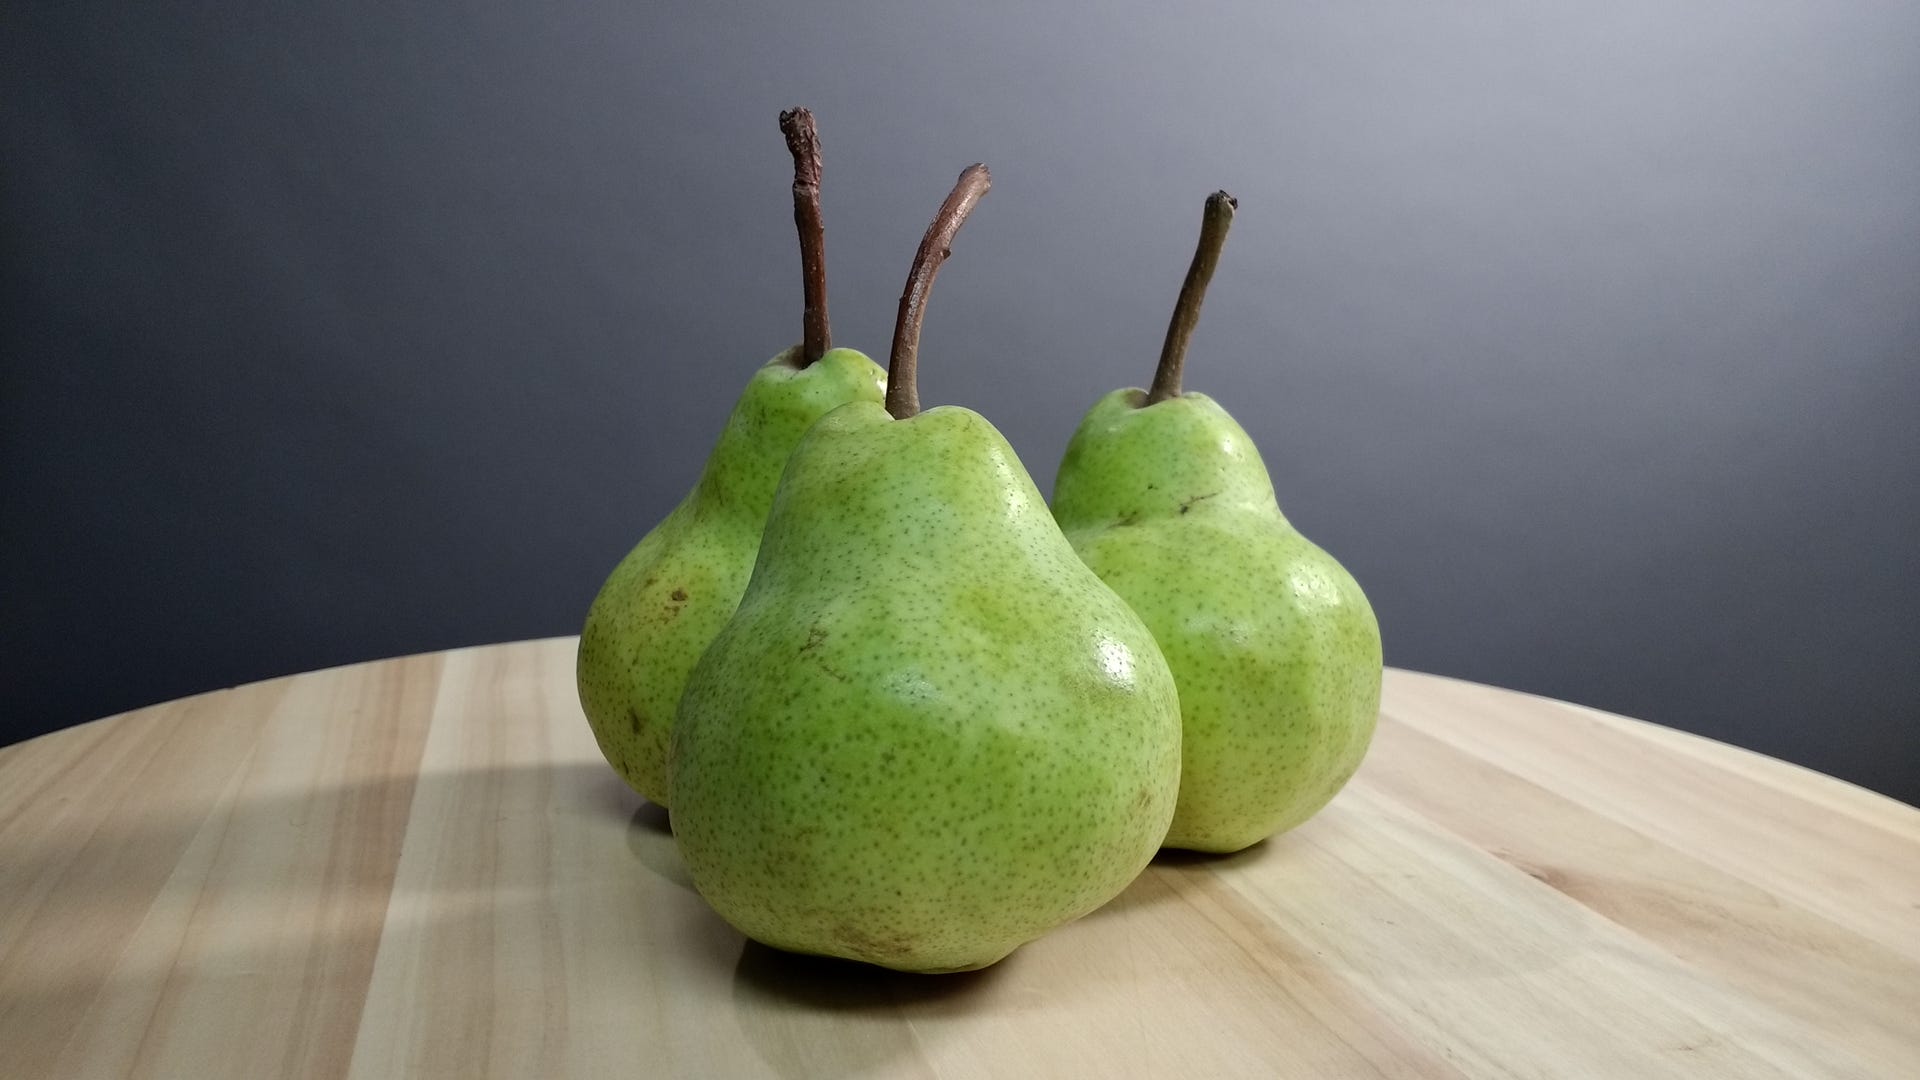 moto-g4-camera-test-pears.jpg